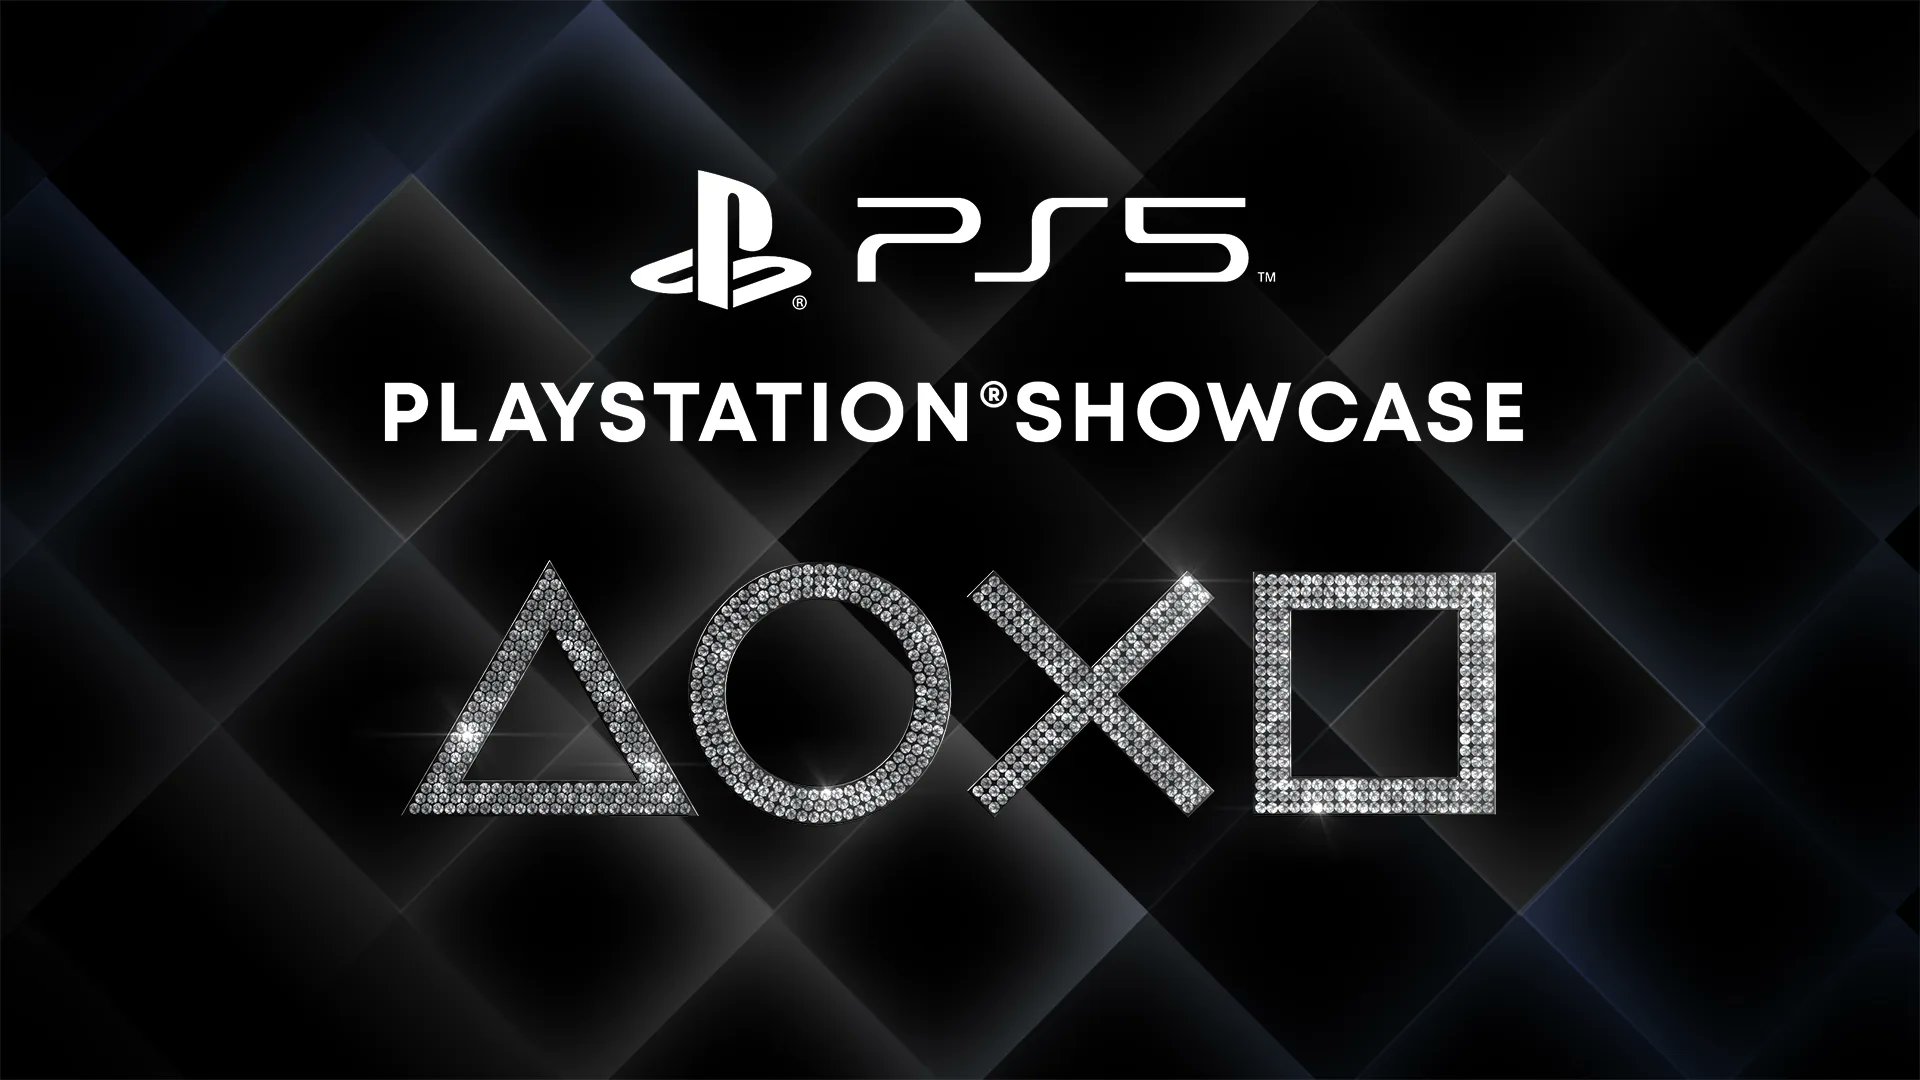 PlayStation-Showcase tatsächlich auf dem Weg Titel